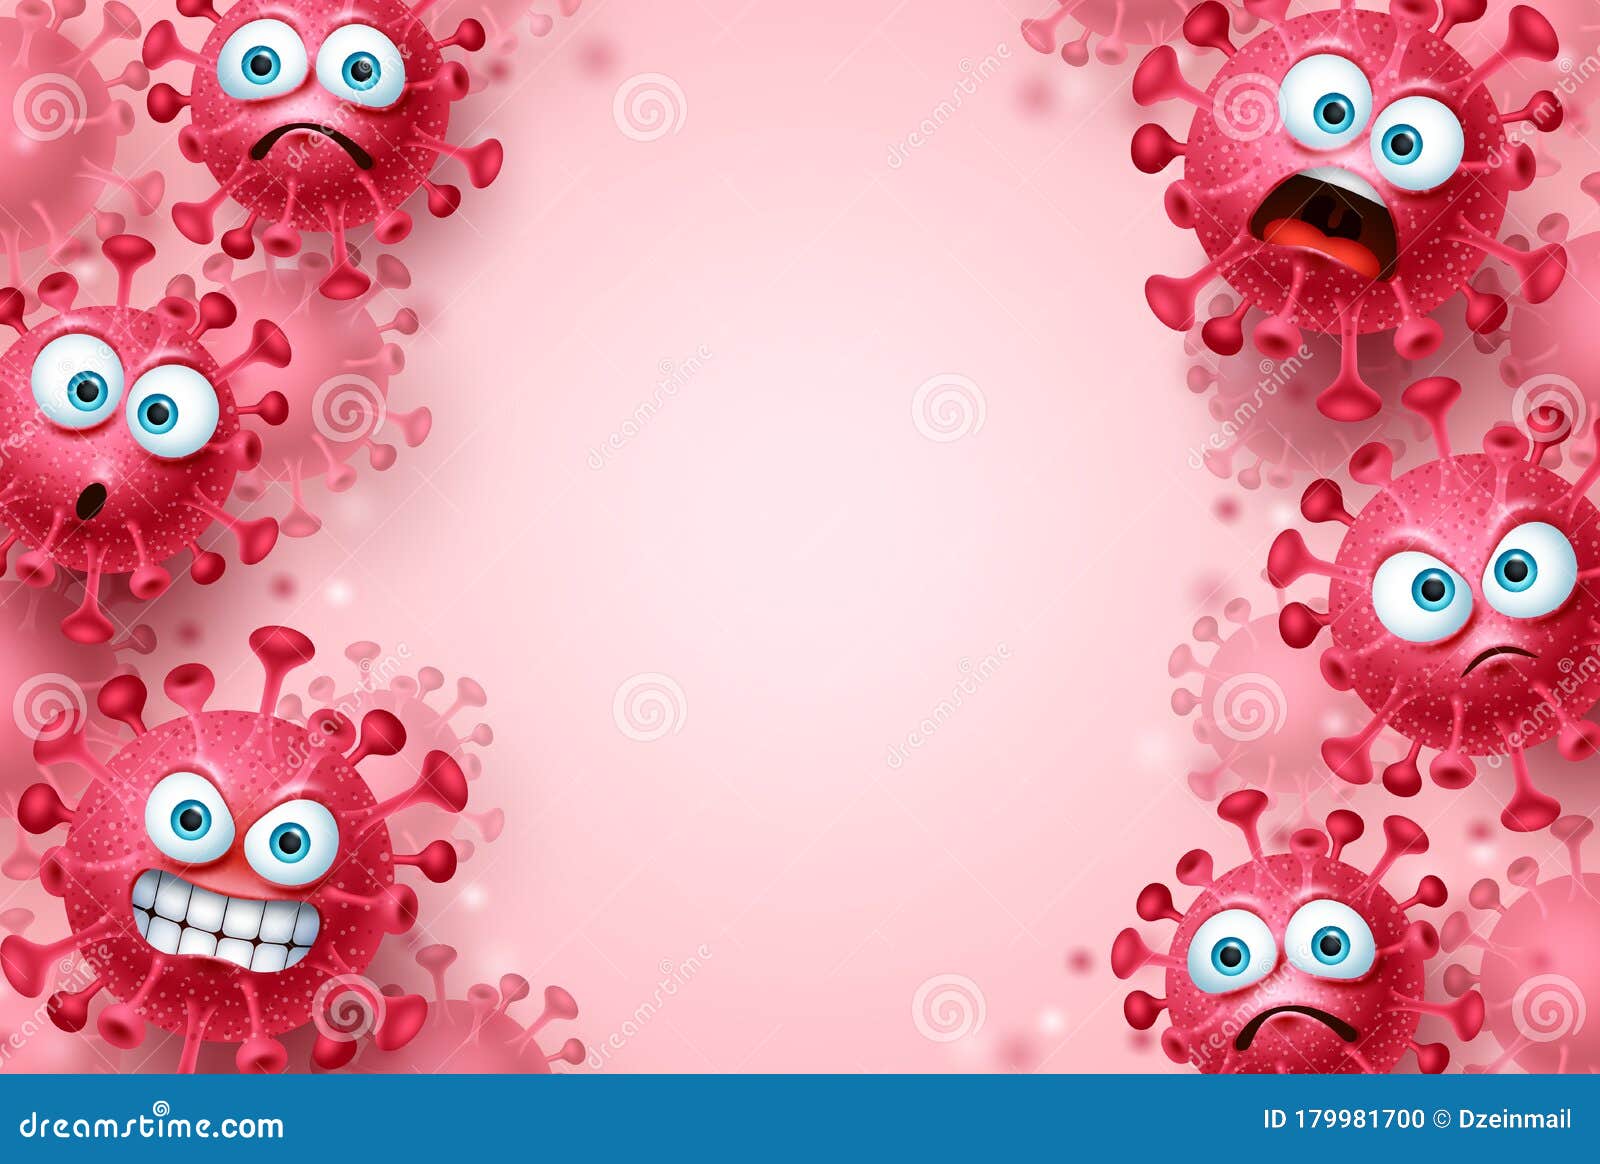 corona virus covid-19  background template. corona virus covid19 emojis and emoticons